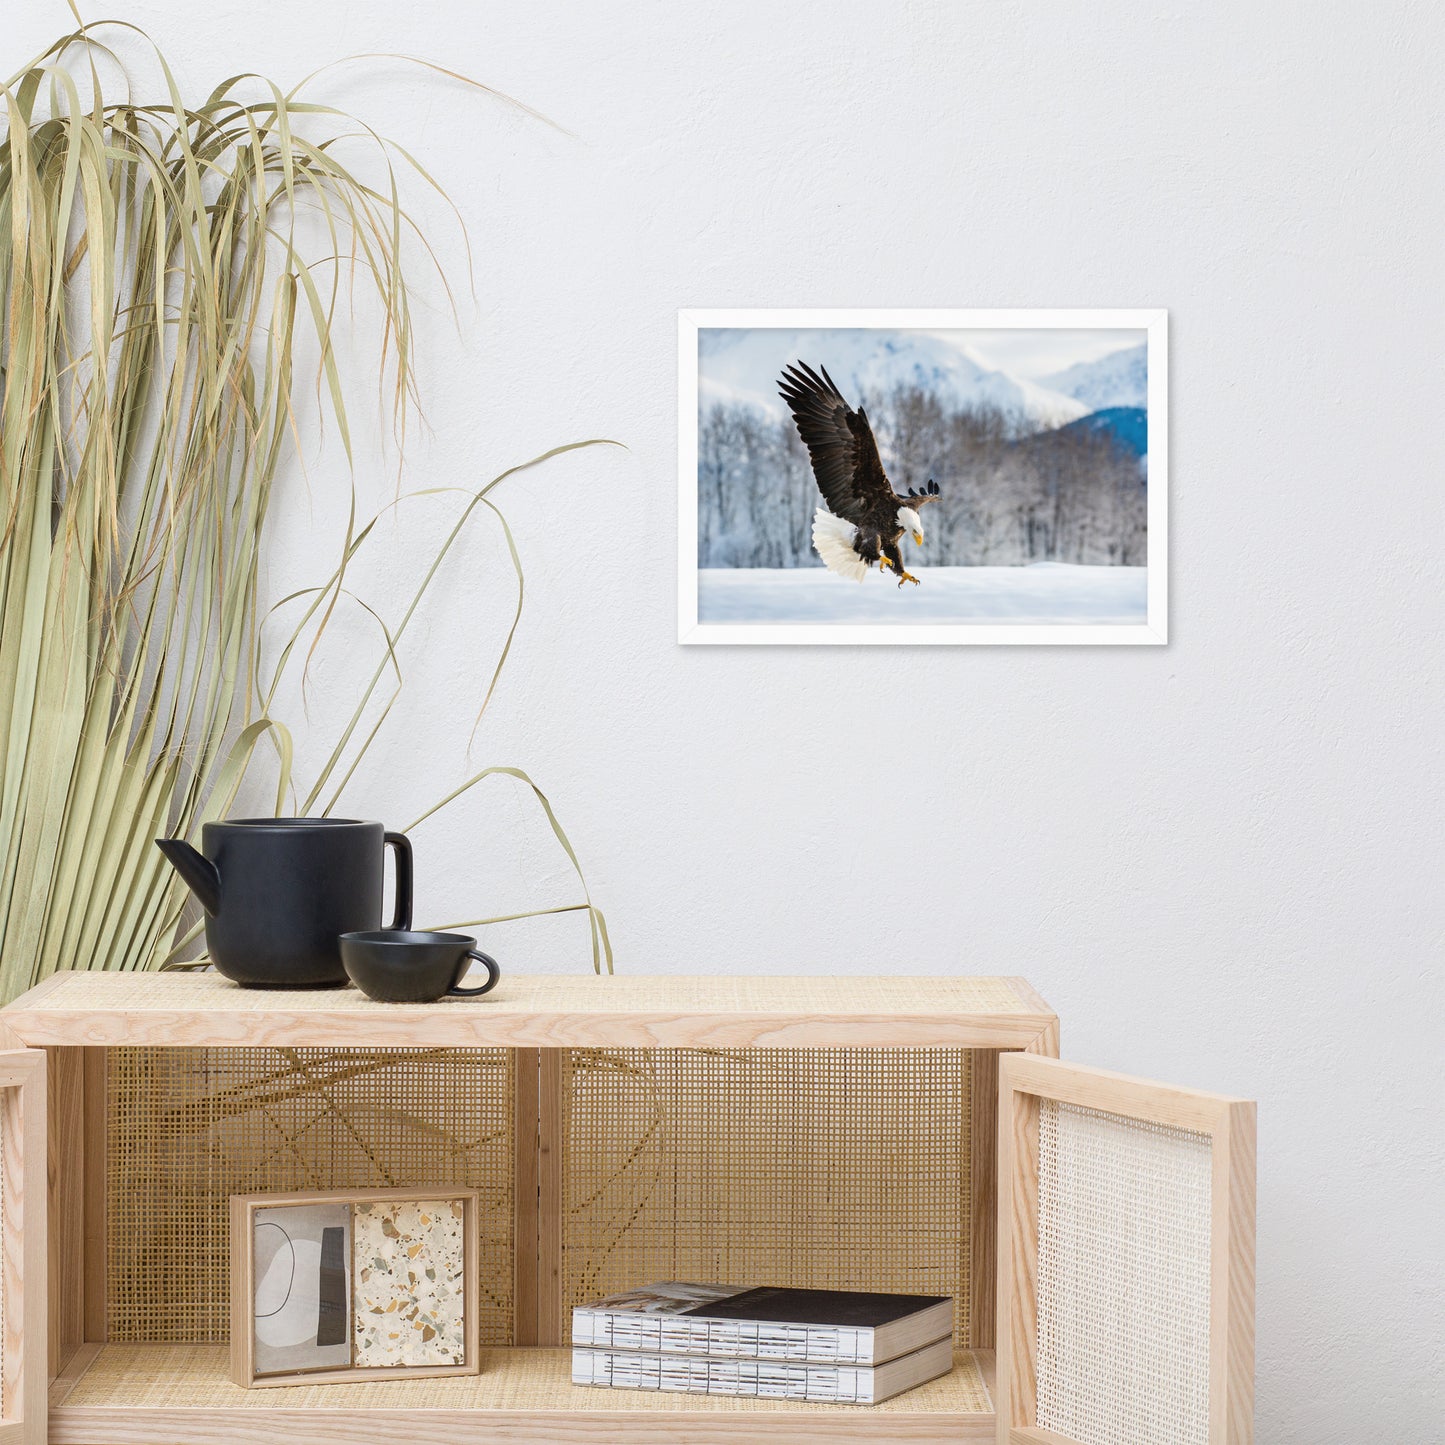 hallway prints ideas, Adult Bald Eagle and Alaskan Winter Animal Wildlife Photograph Framed Wall Art Print